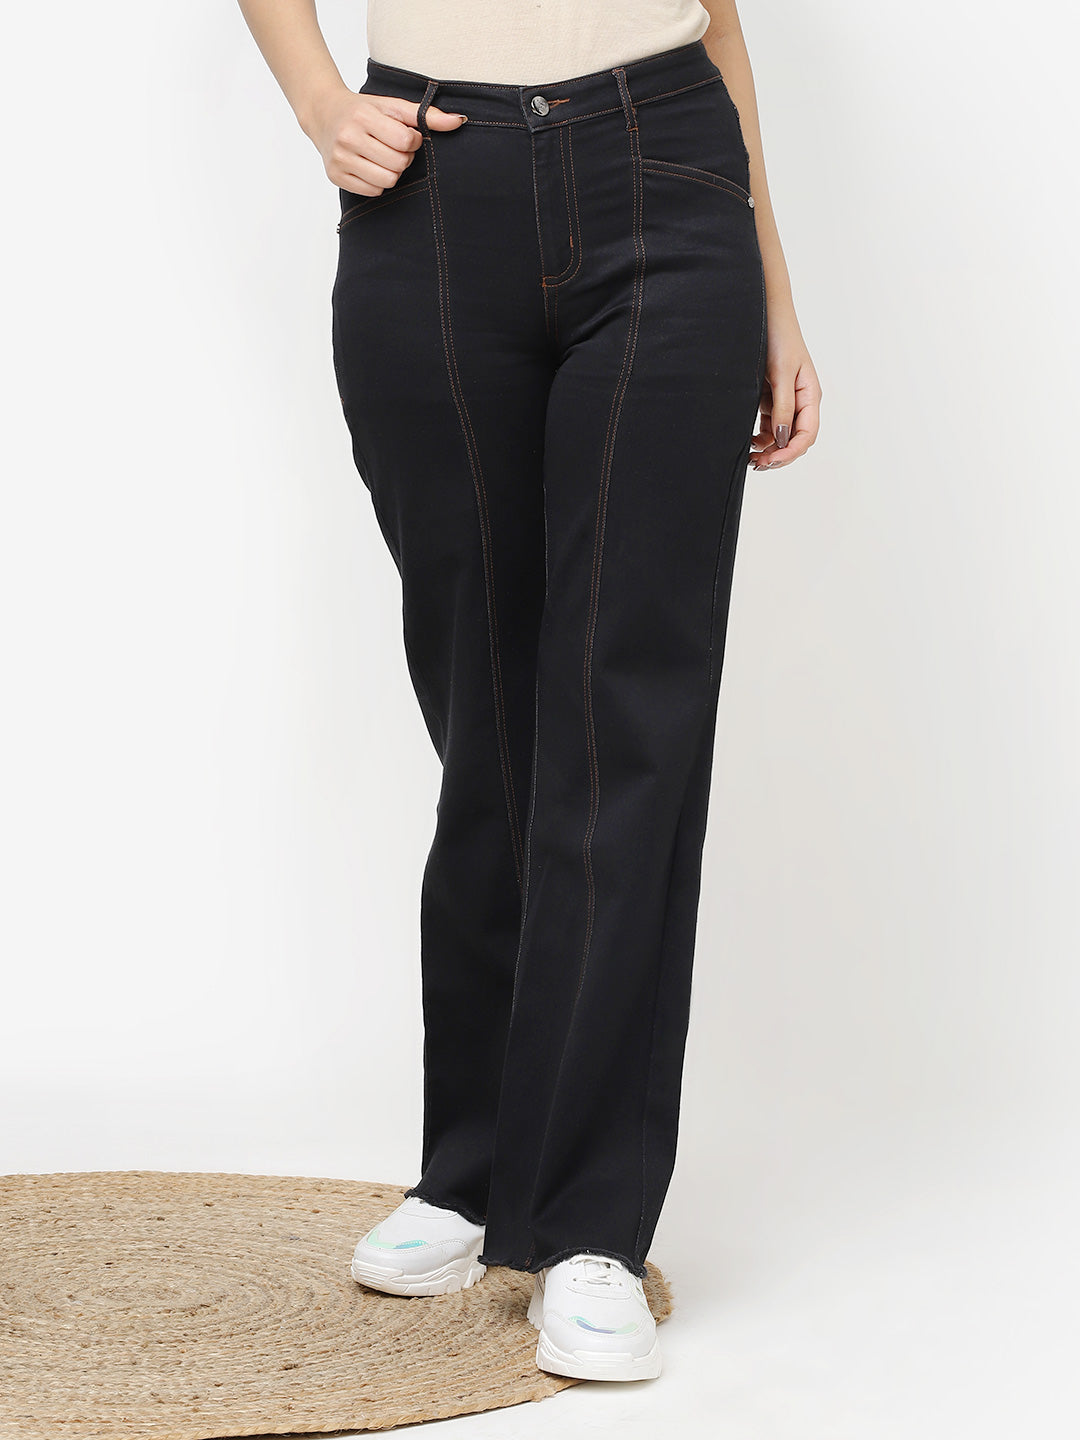 Black Panelled Jeans for Women